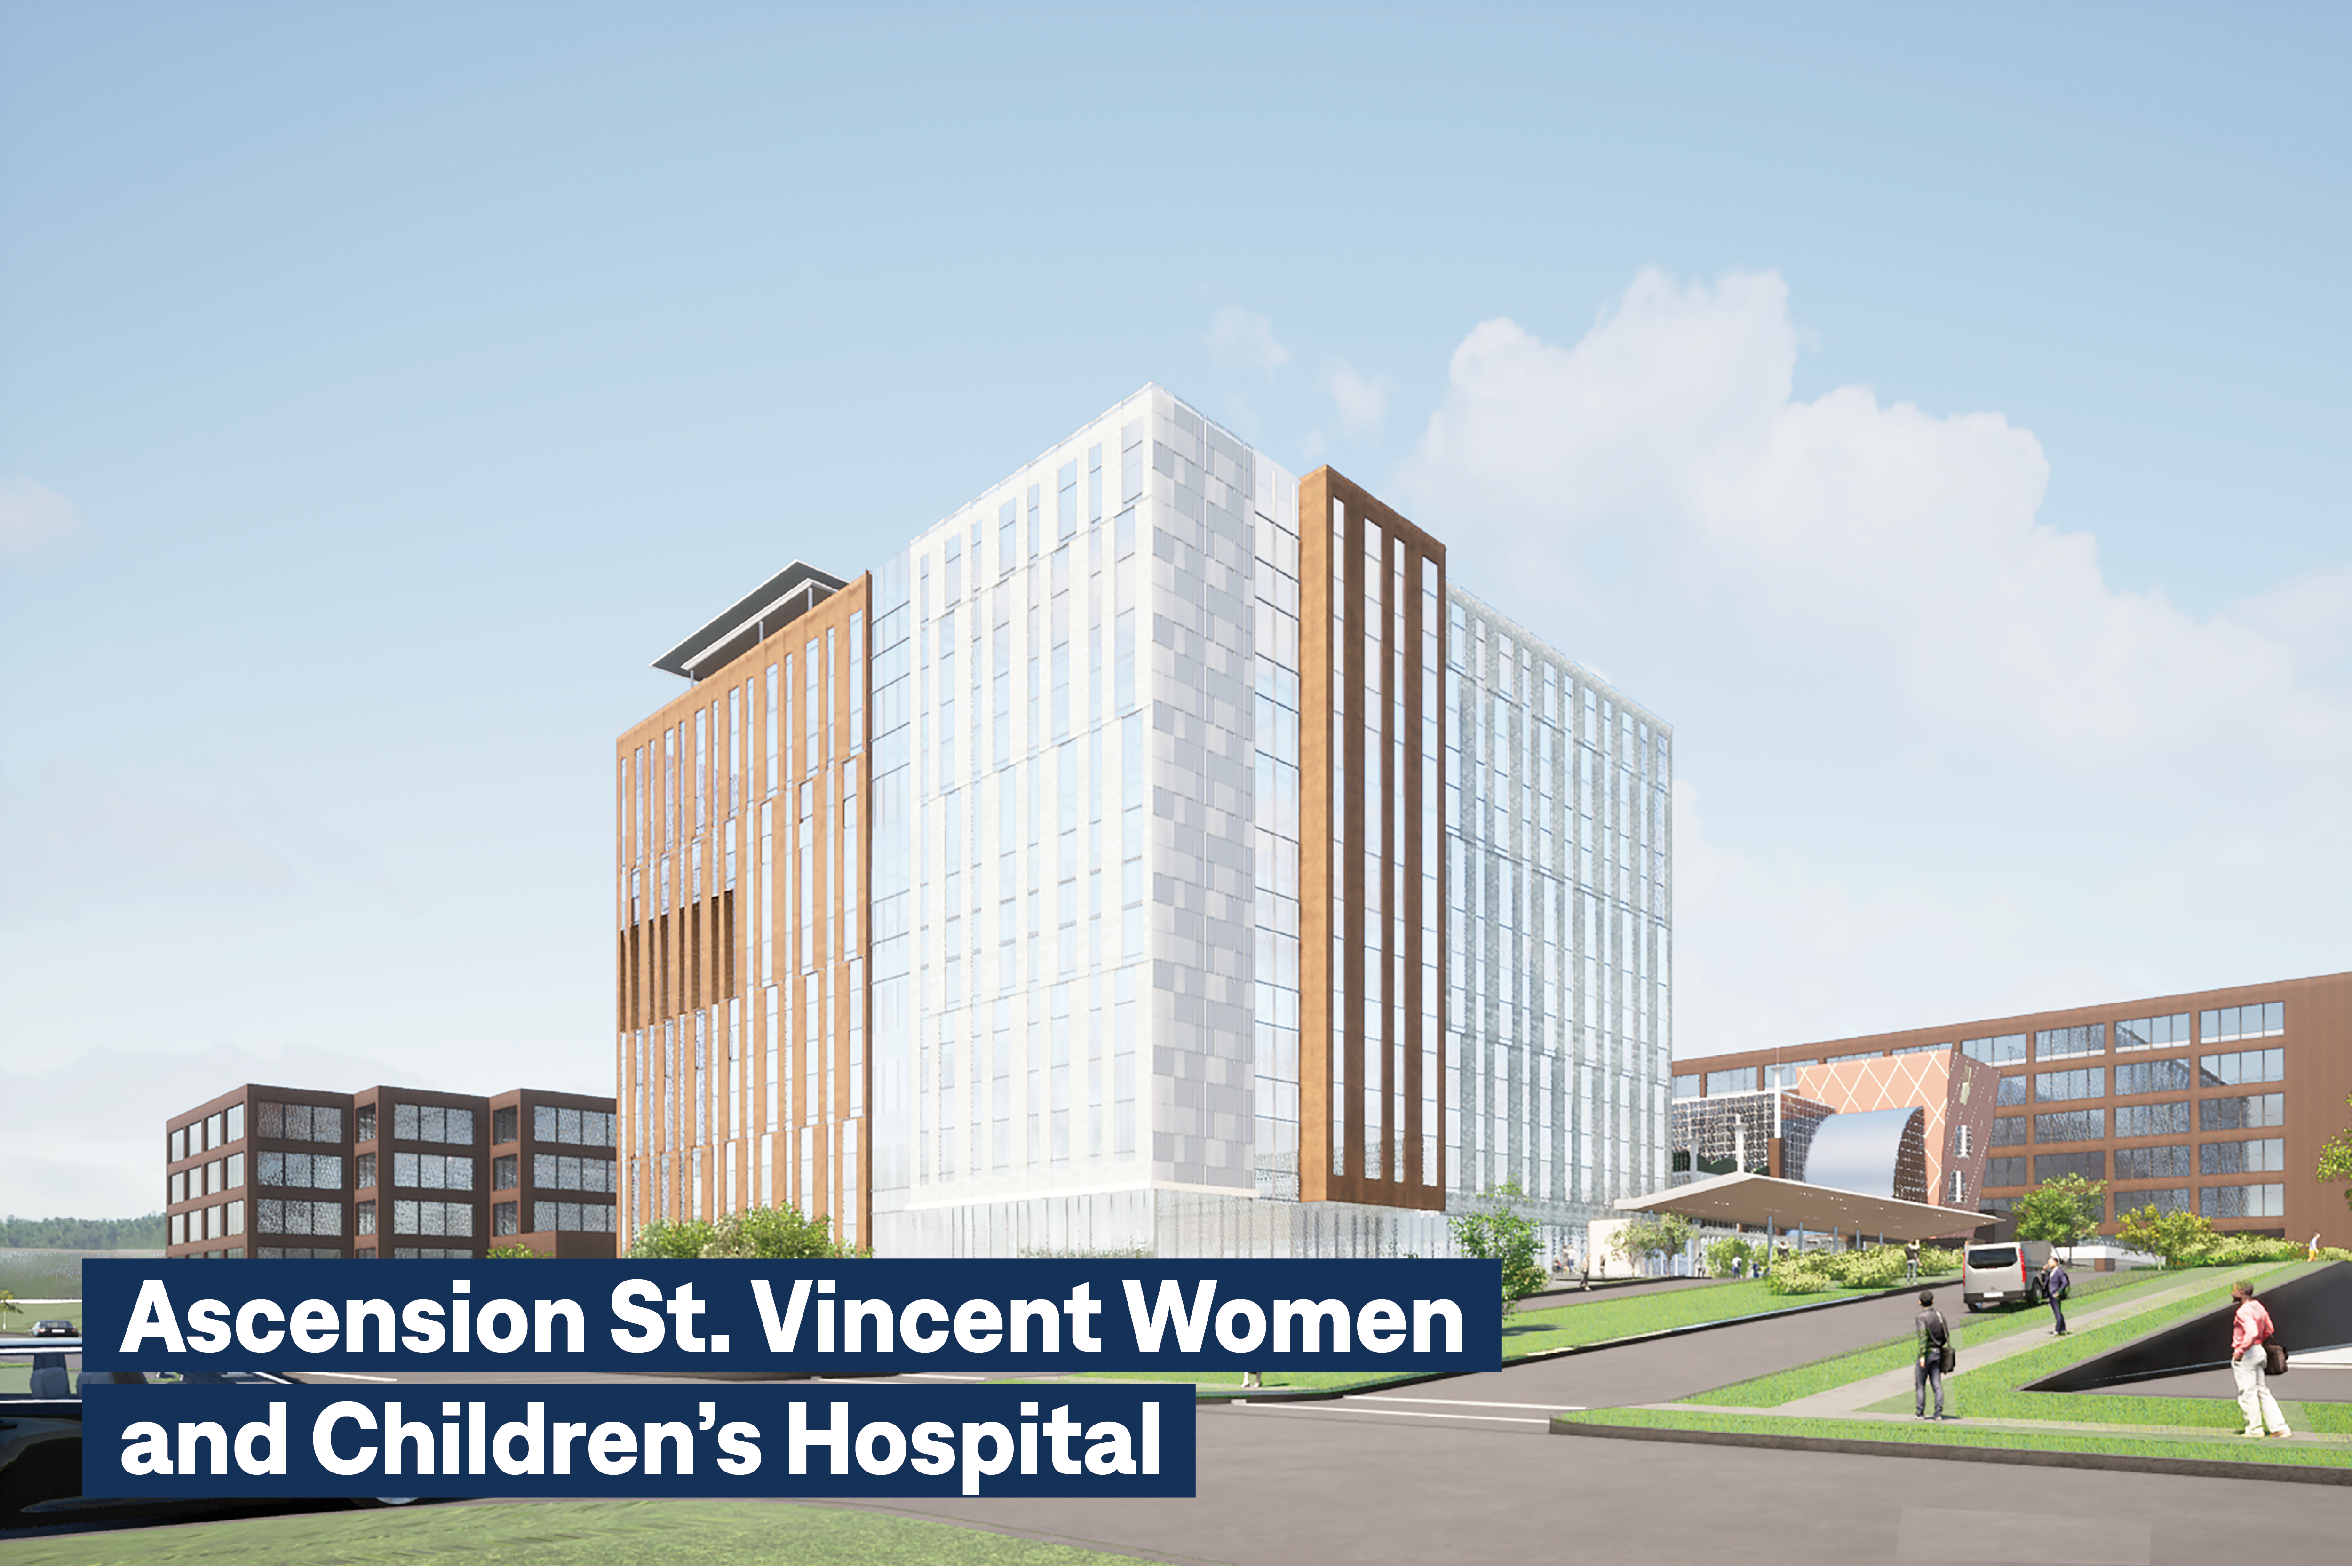 Ascension St. Vincent Women and Children's Hospital